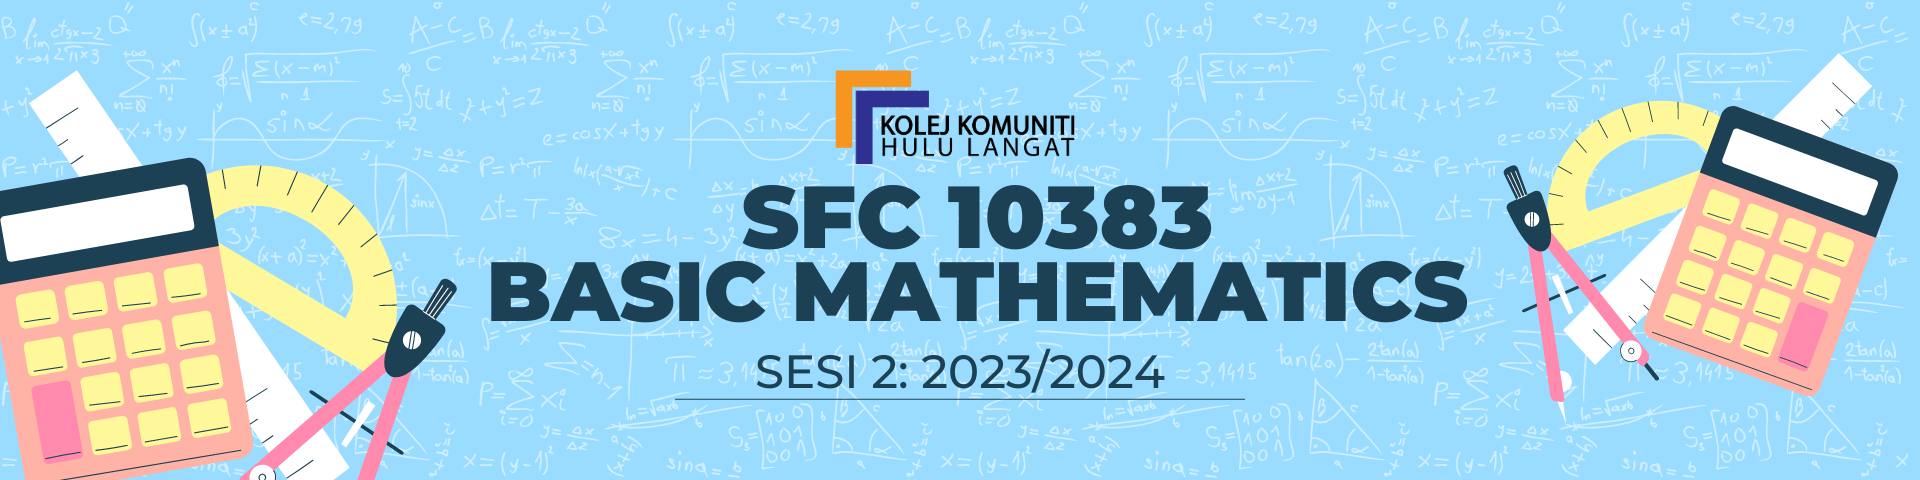 SFC 10383 BASIC MATHEMATICS